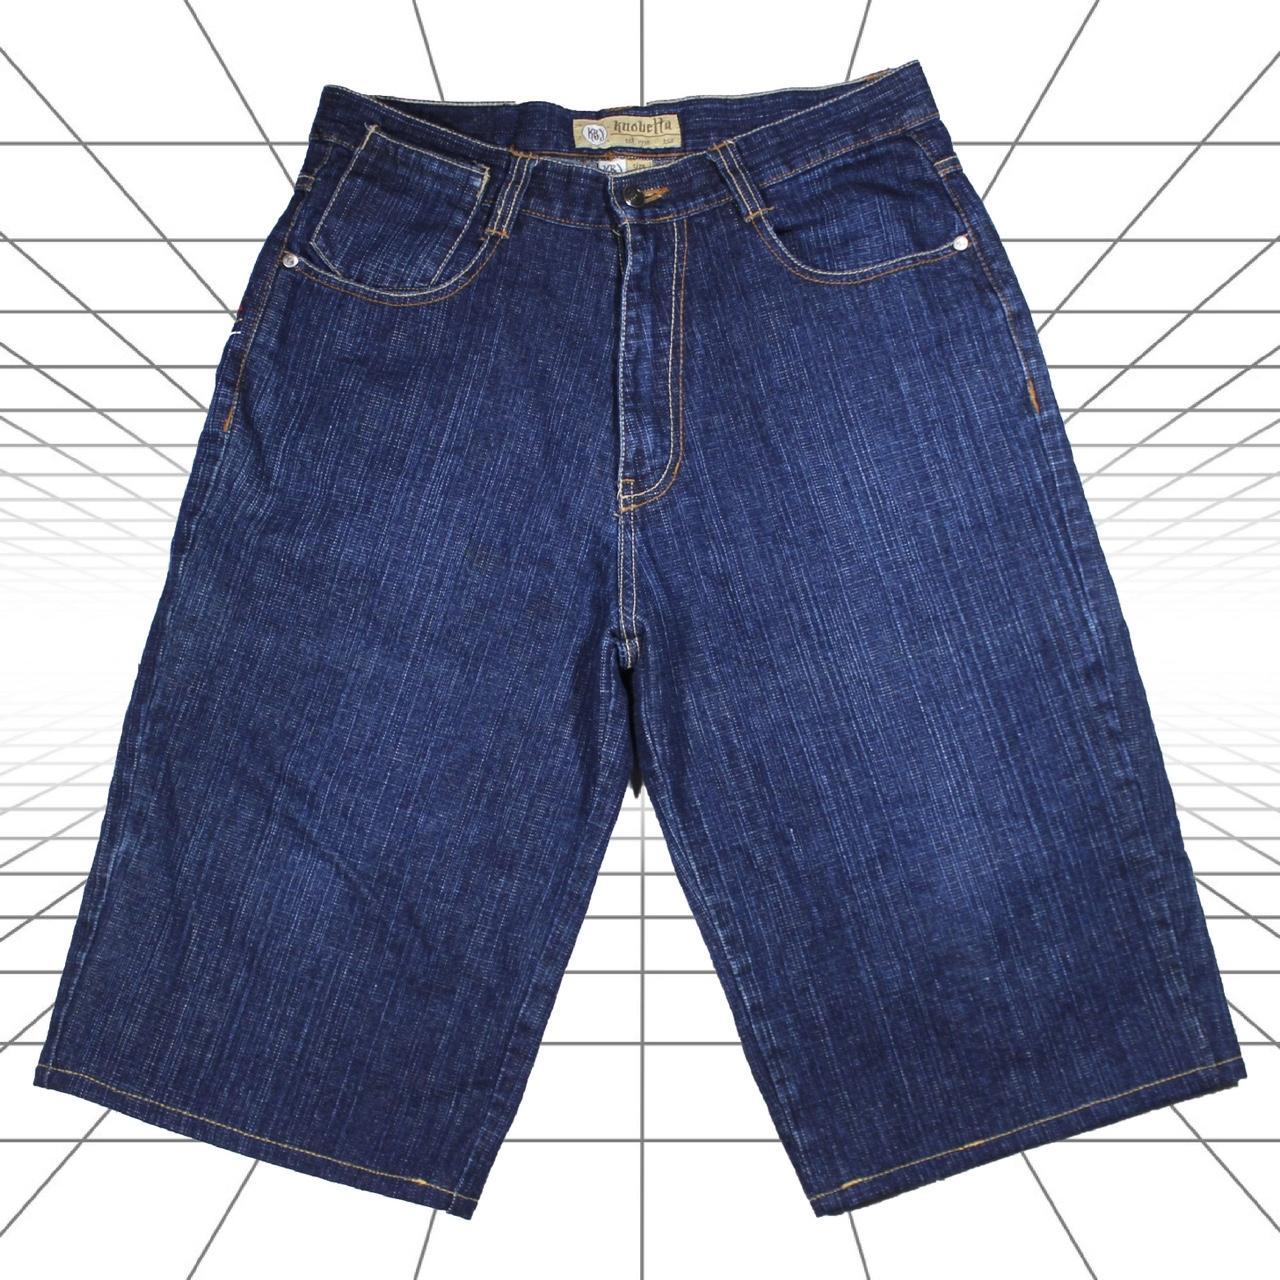 Custom, One of a Kind Y2K Shorts by Knobetta. These... - Depop